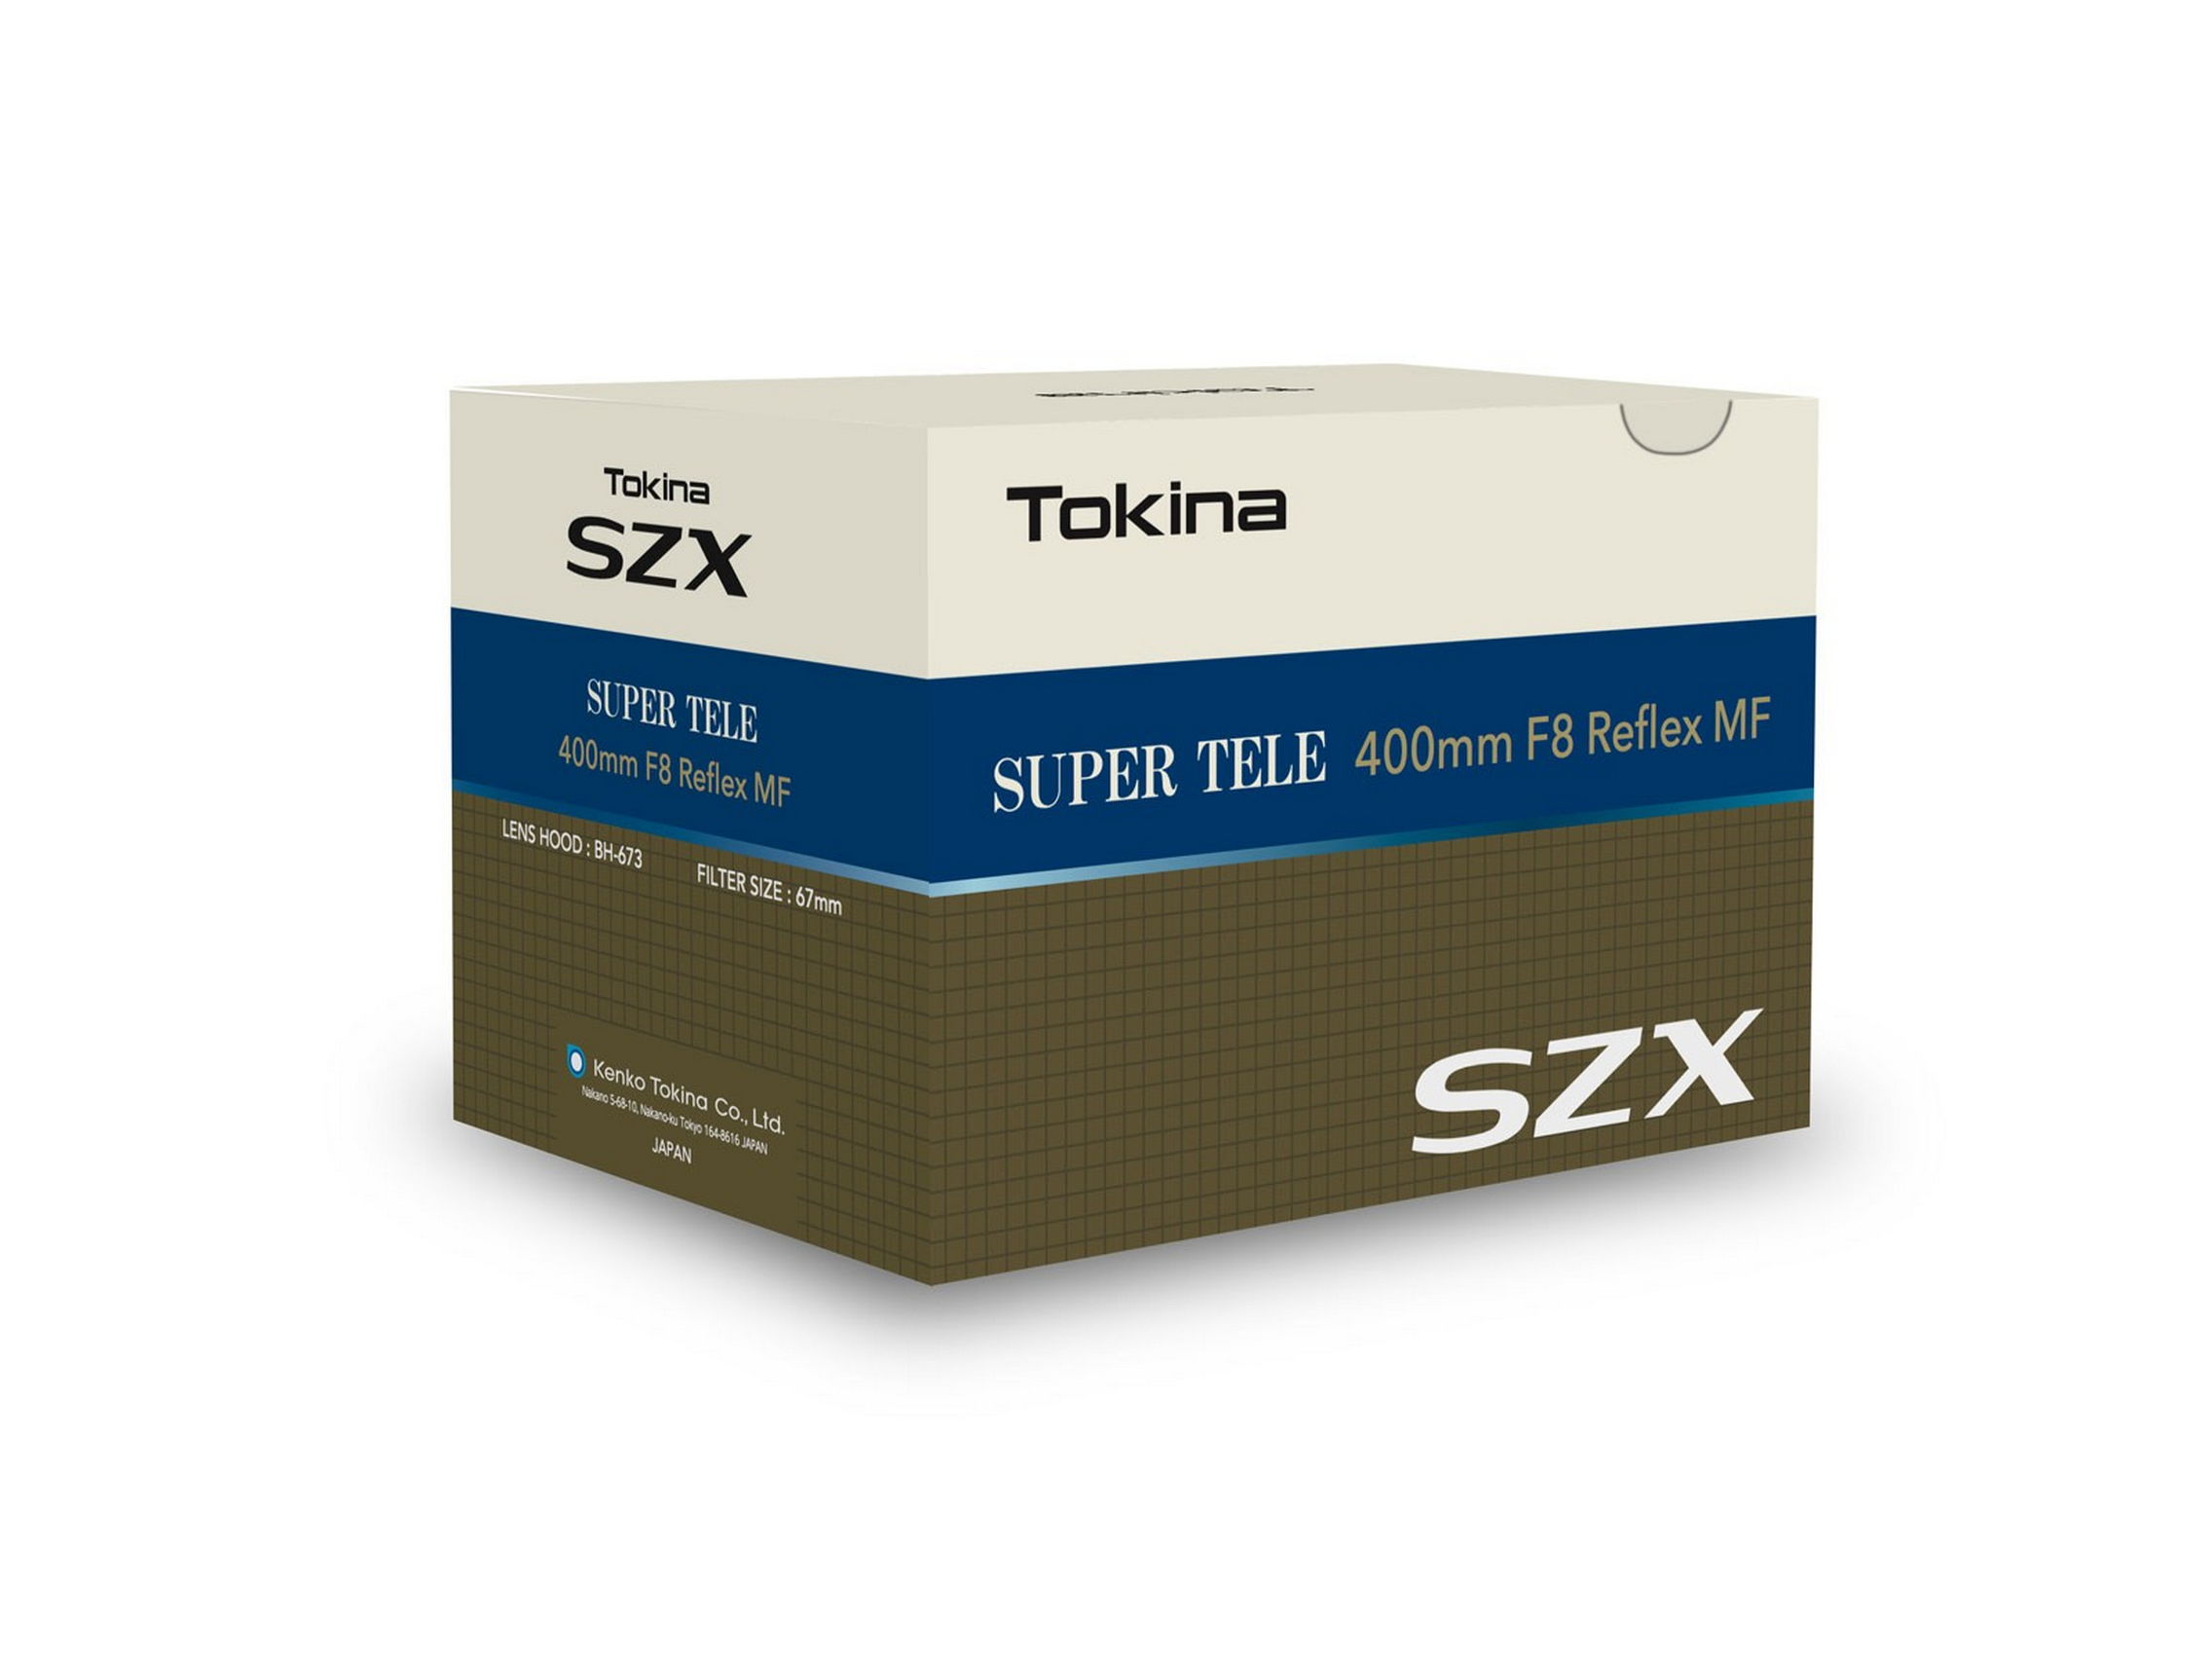 Tokina SZX 400mm F8 Feflex MF